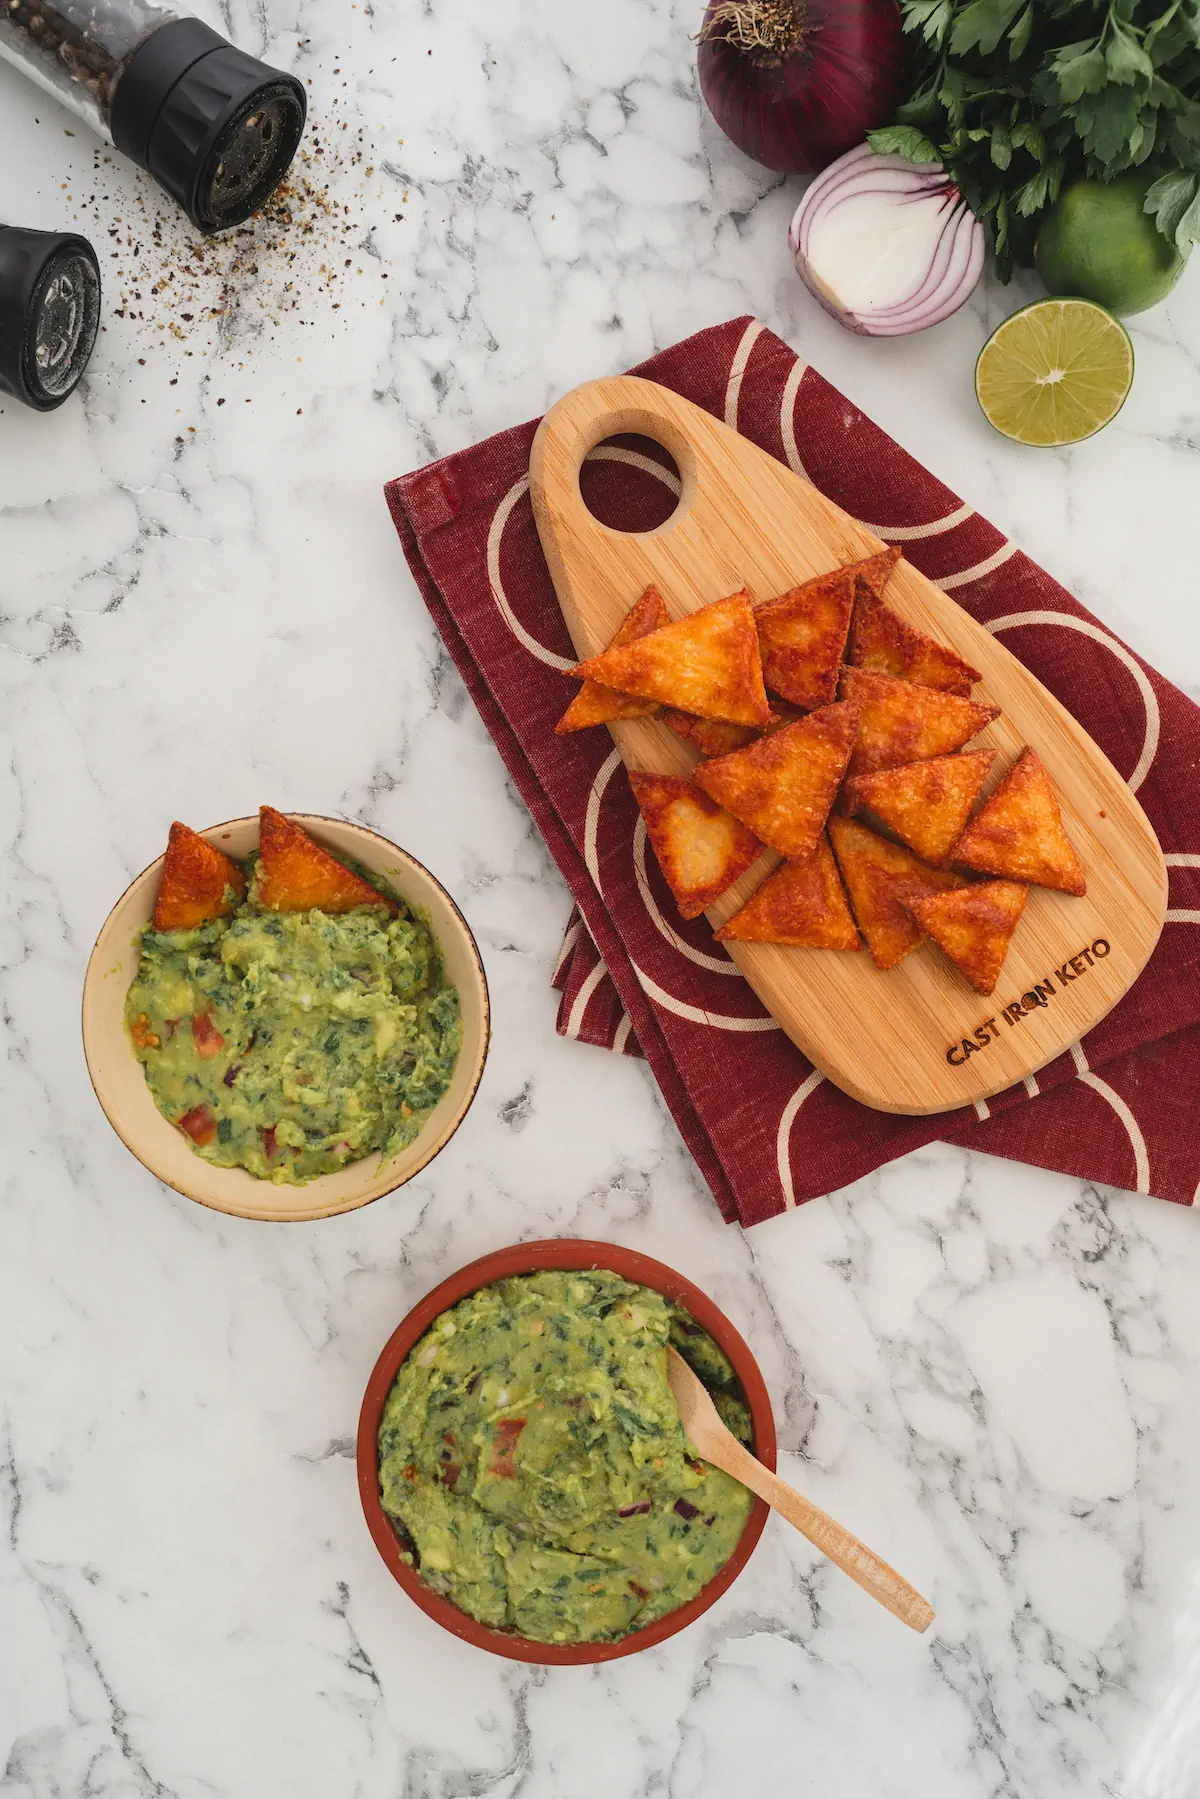 Keto-friendly tortilla chips served on a wooden board beside two guacamole bowls.